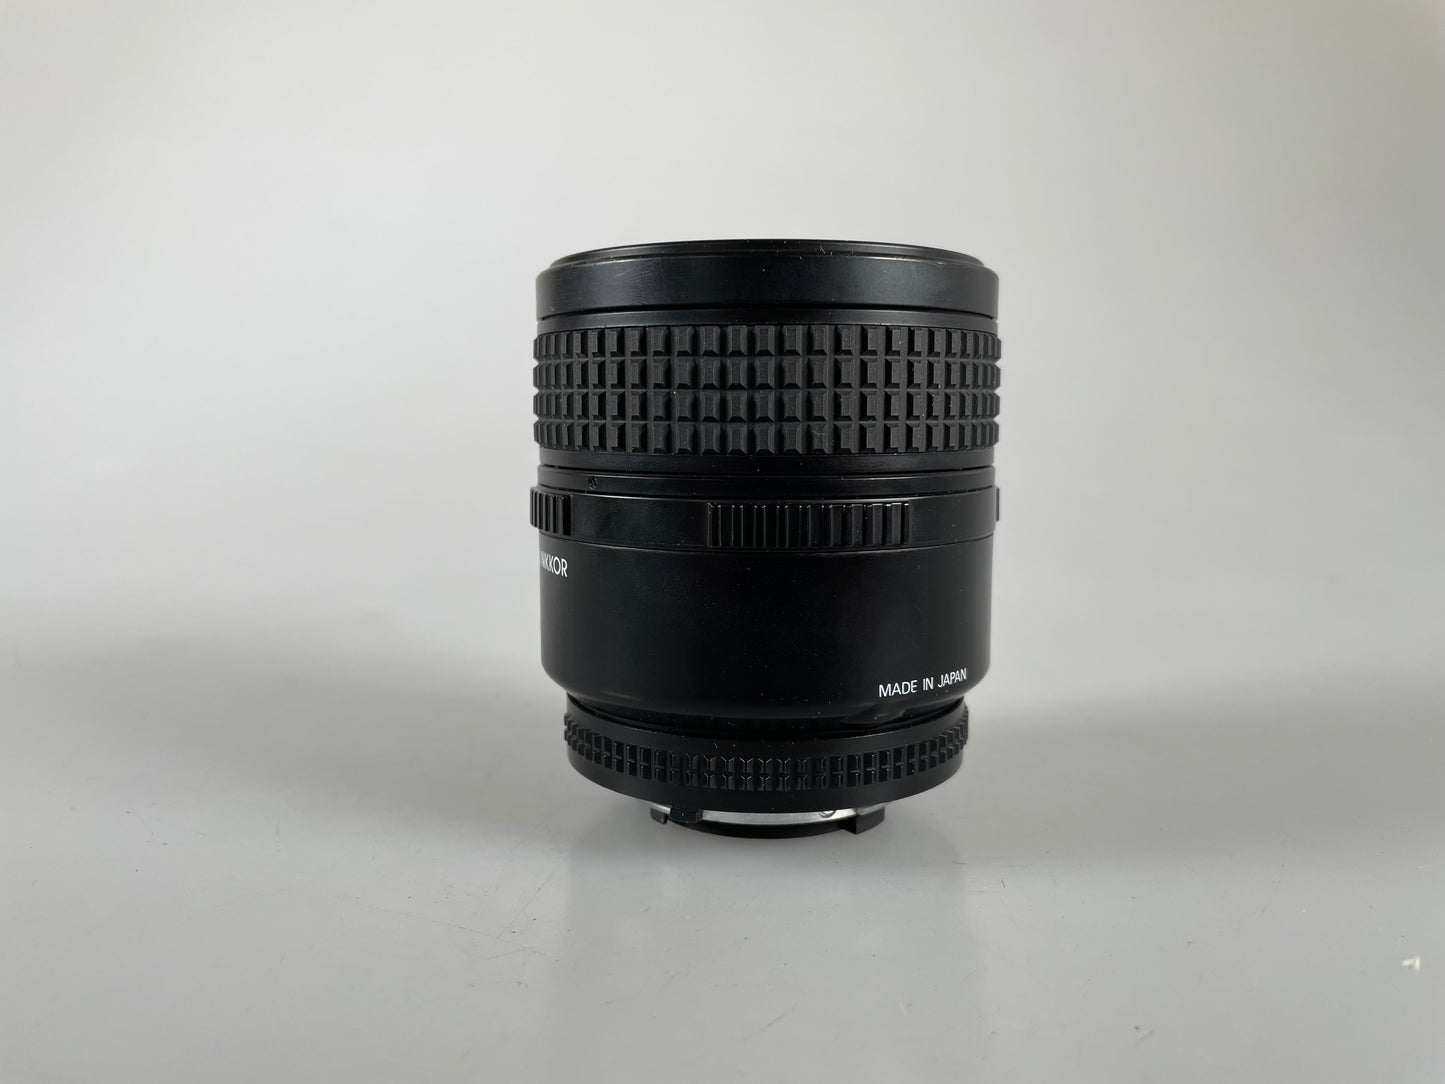 Nikon Nikkor AF 60mm f2.8 D micro macro lens